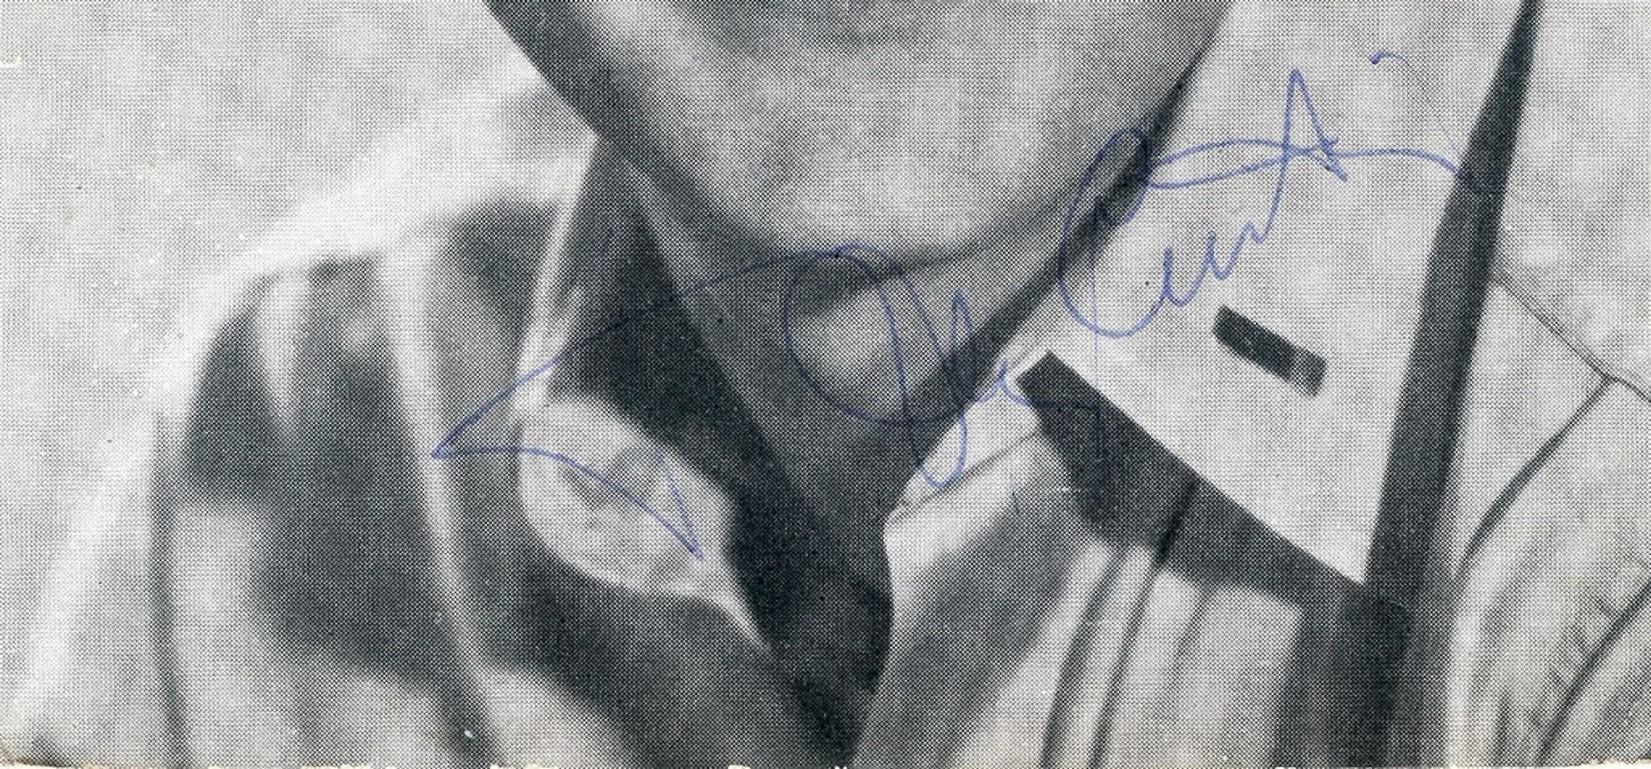 Autographed Portrait of Tony Curtis - Vintage b/w Postcard - 1959 - Photograph by Unknown